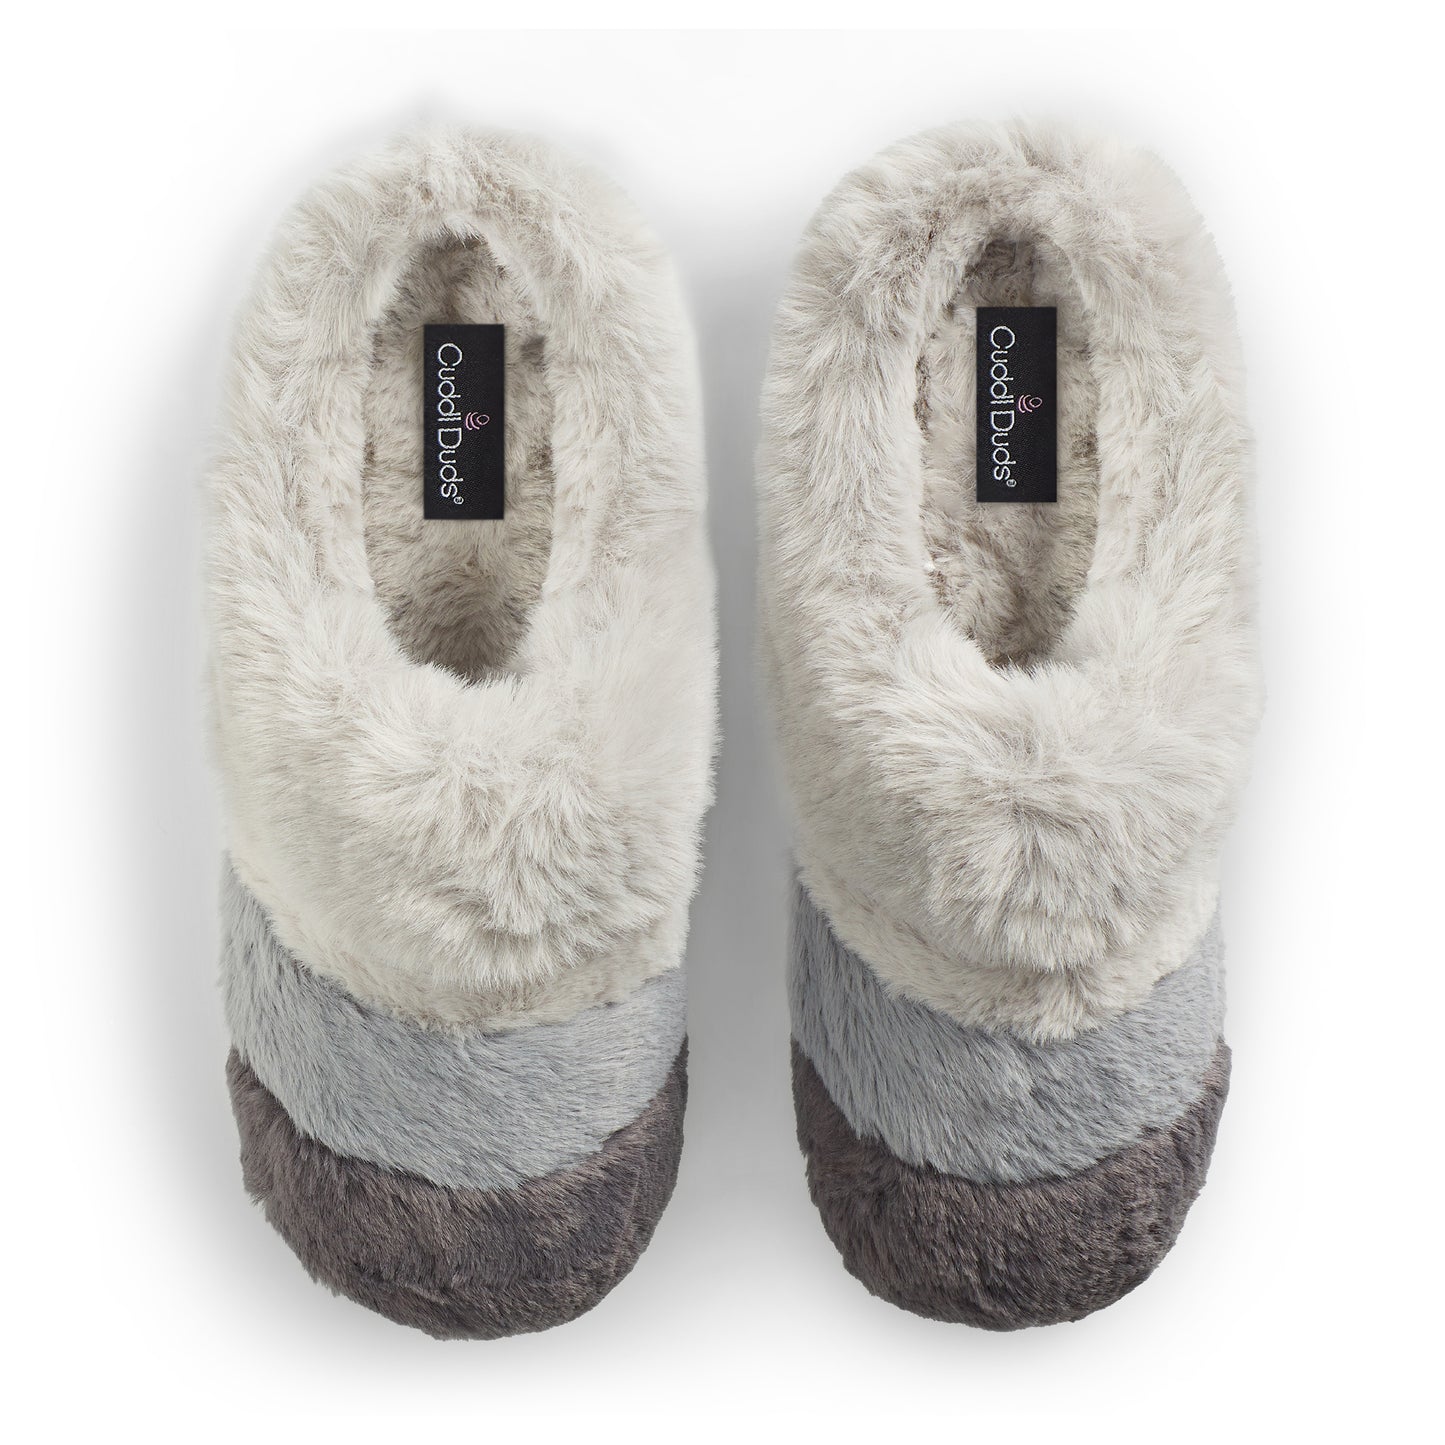 Glacier Gray Multi;@A Faux Fur clog slipper with Nostalgia Rose layers